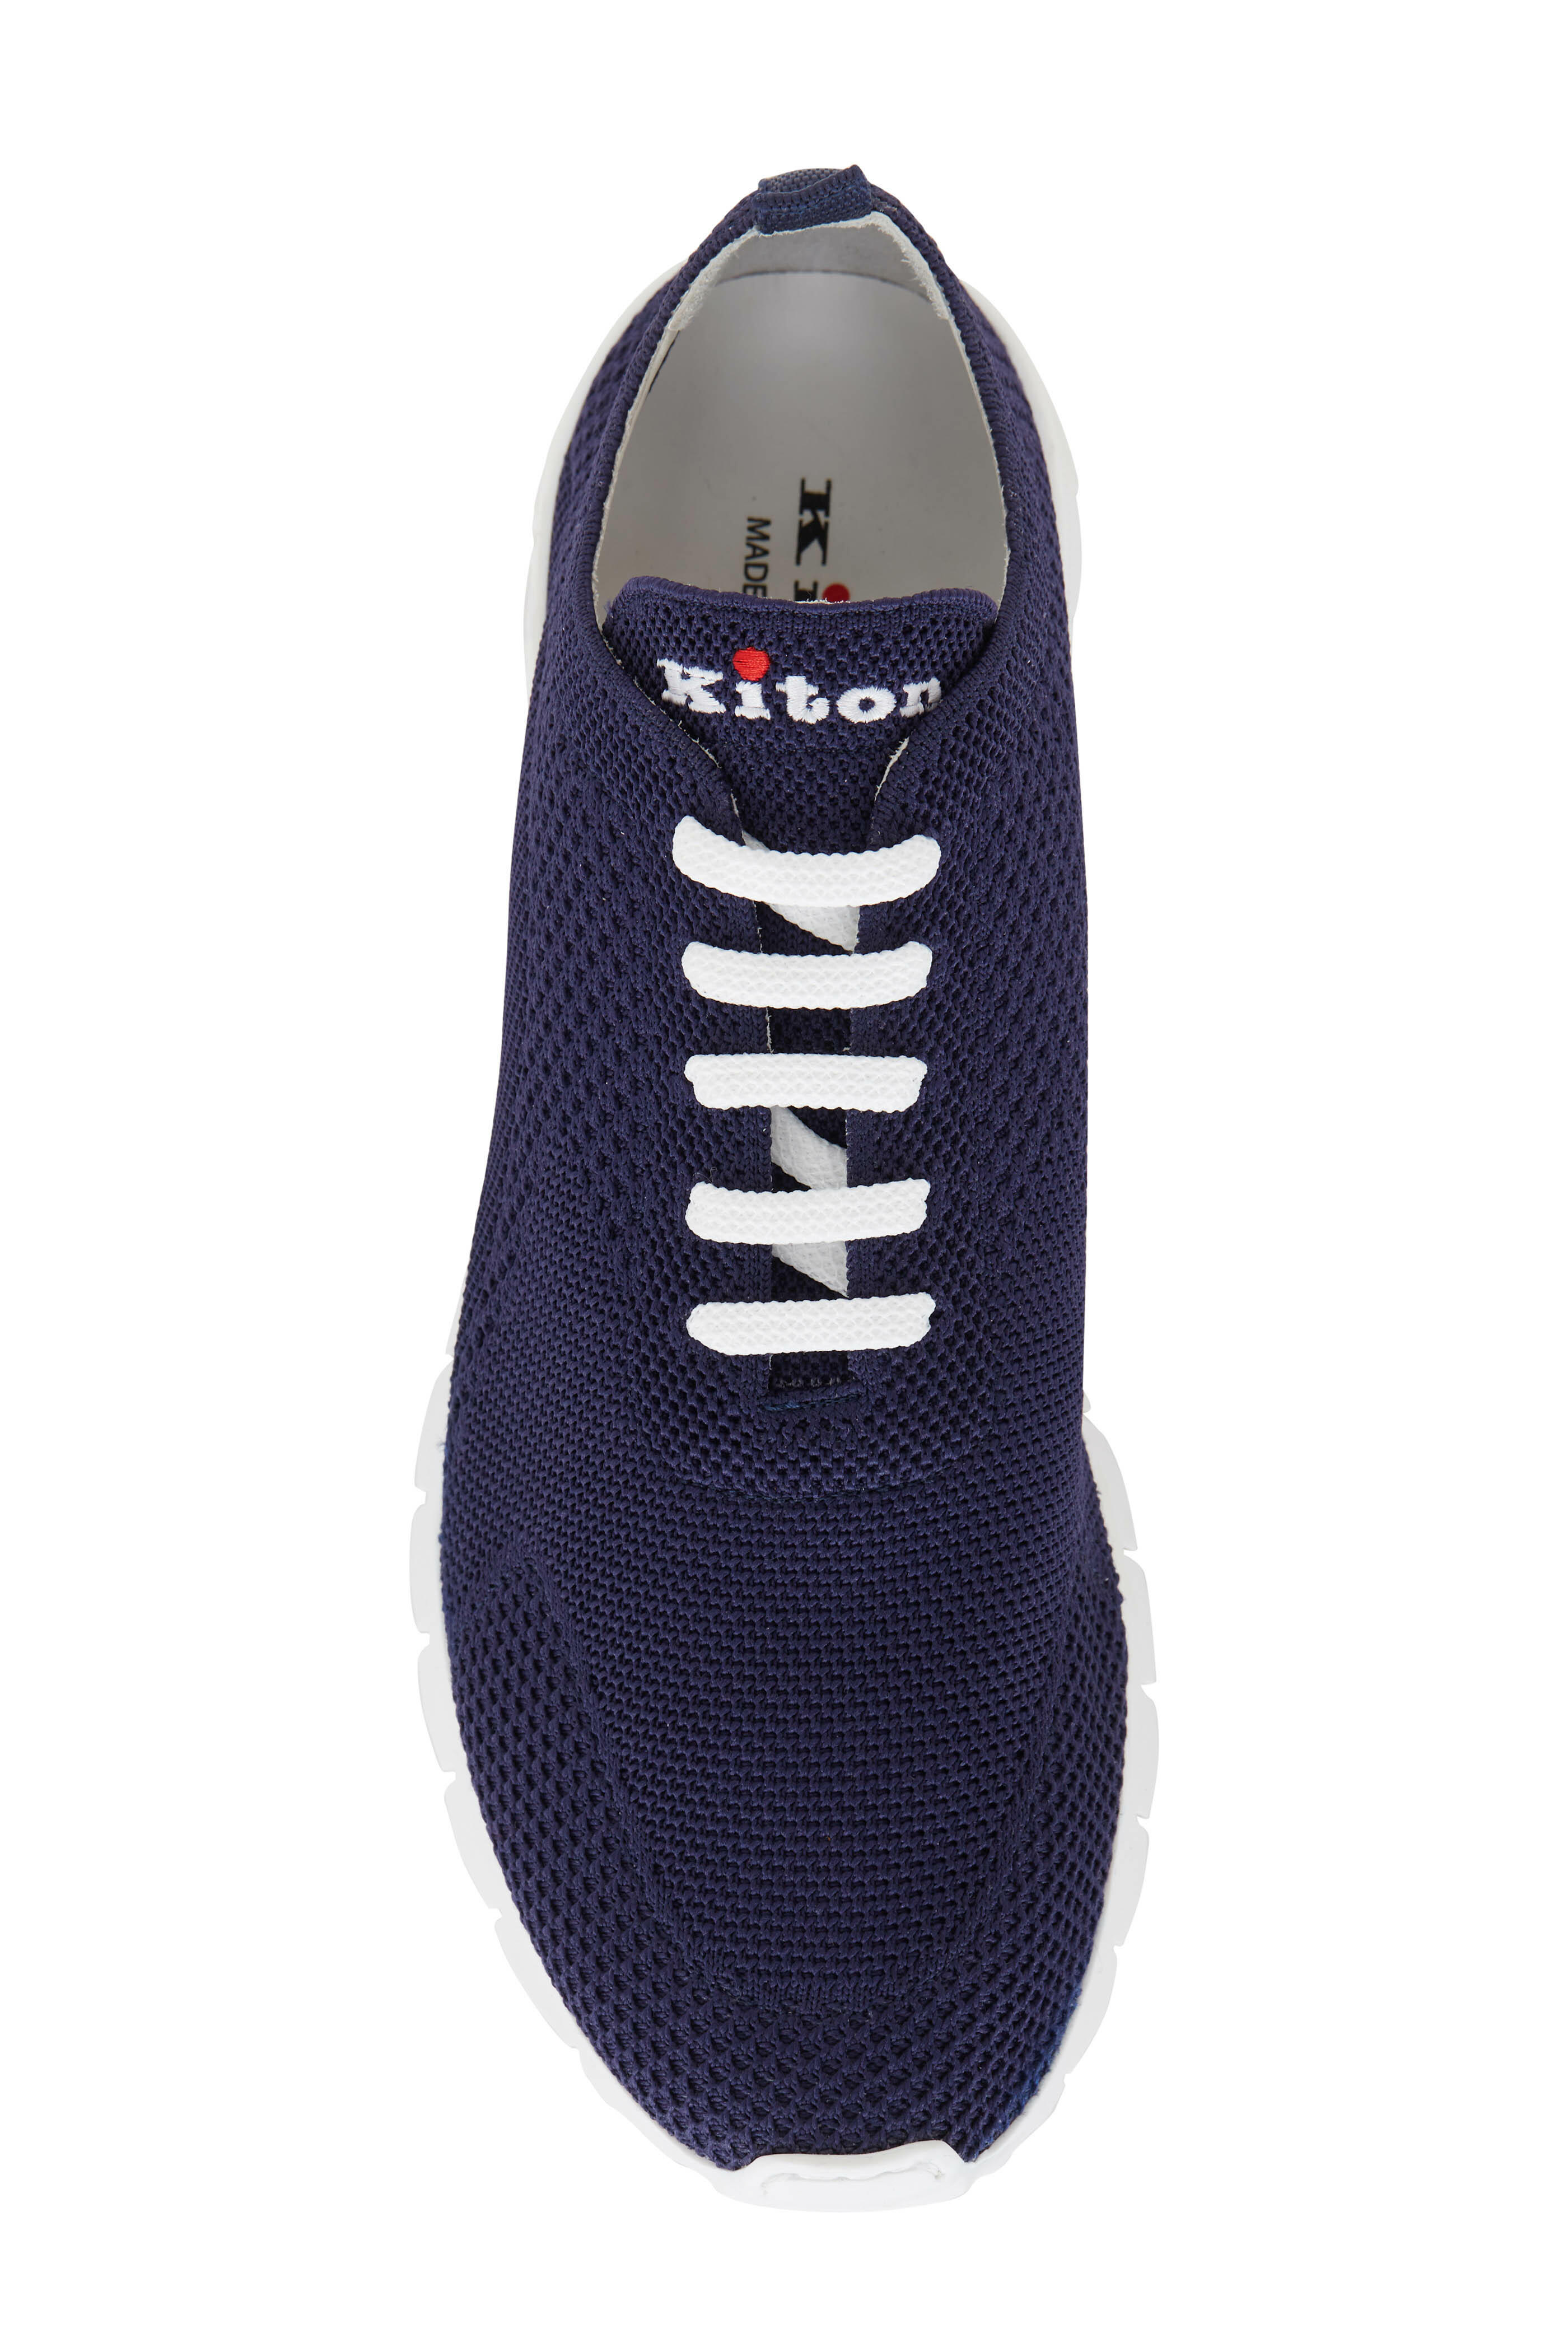 Kiton - Navy Knit Sneaker | Mitchell Stores